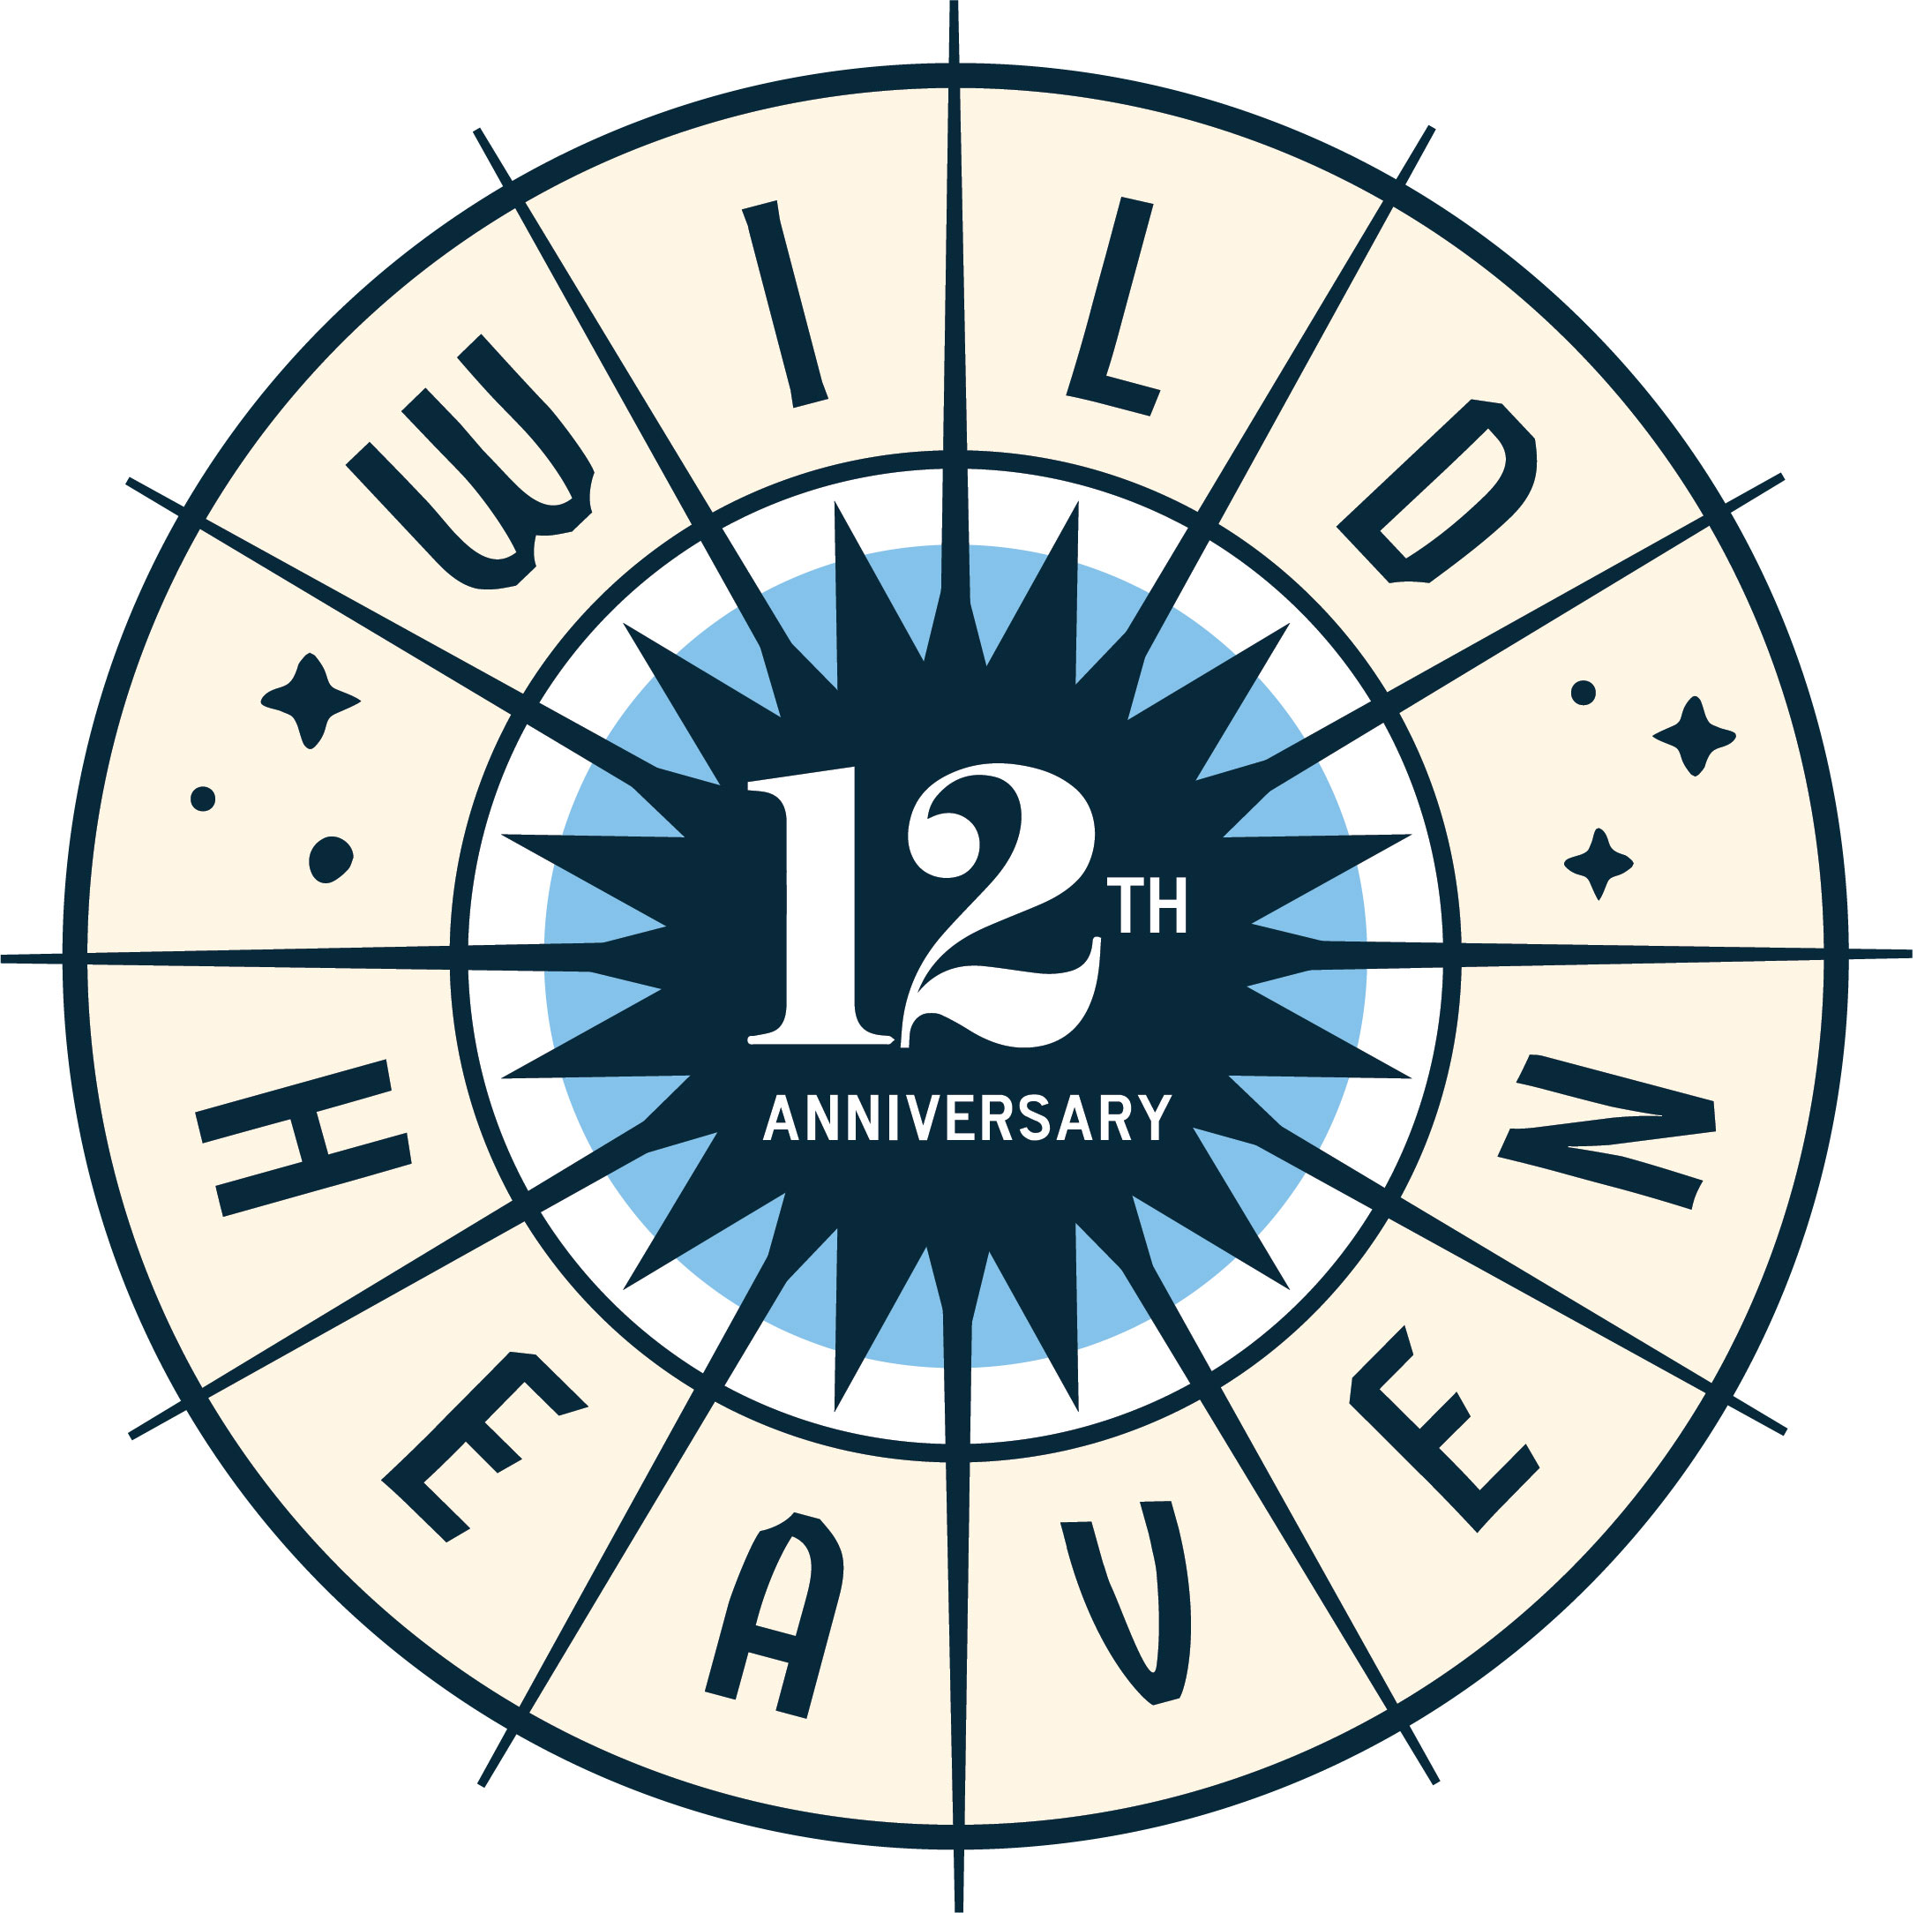 Wild-Heaven-12th-Anniversary